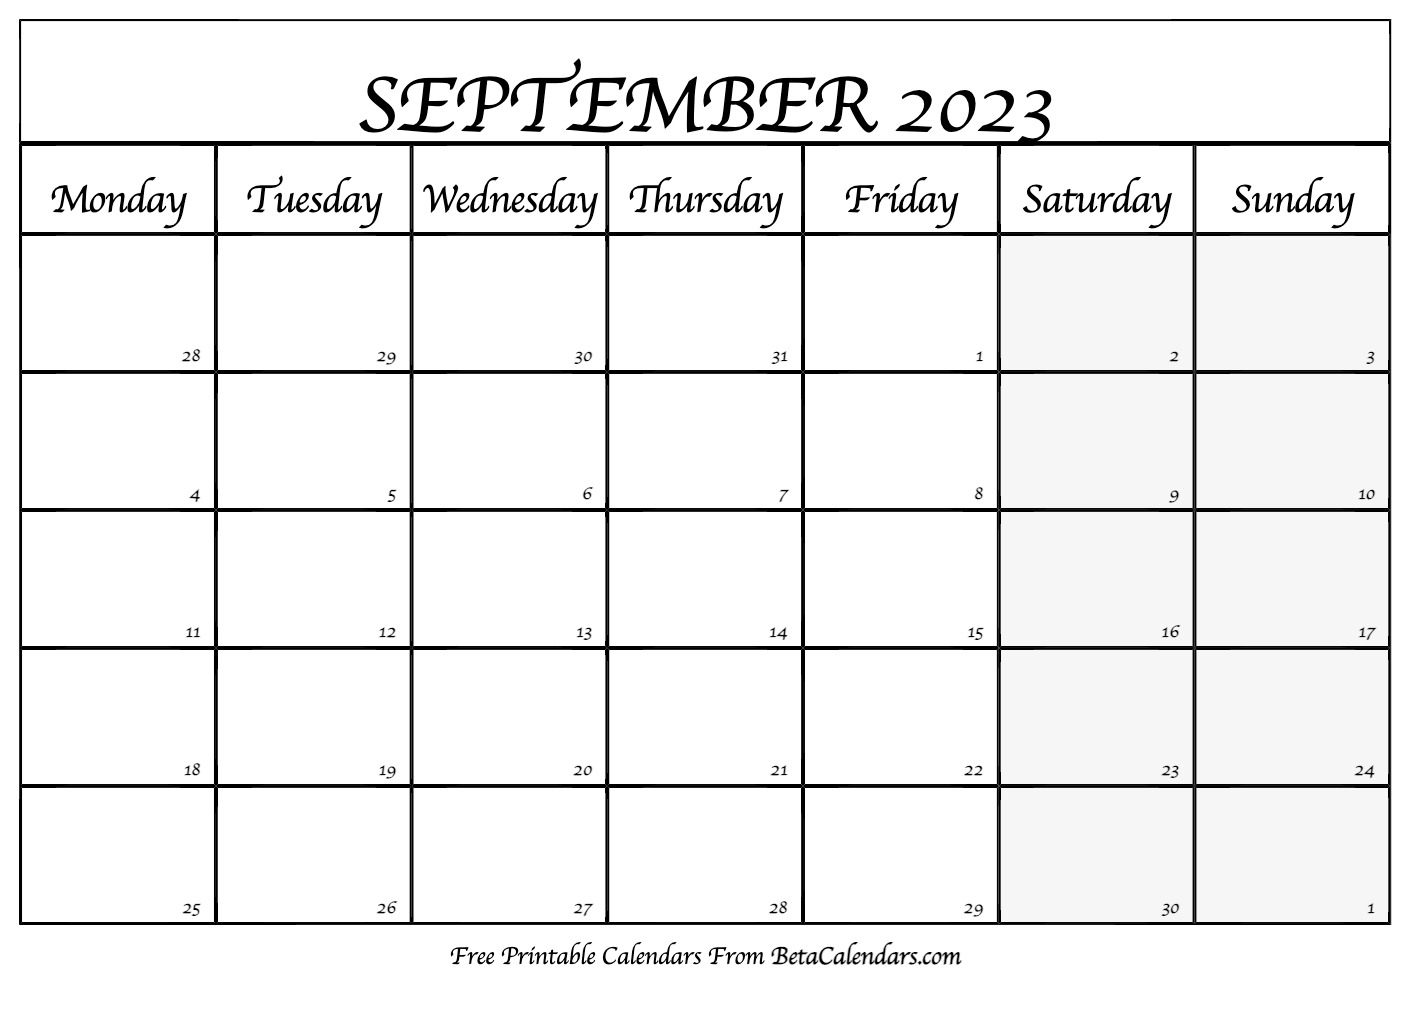 Blank September 2023 Calendar Template